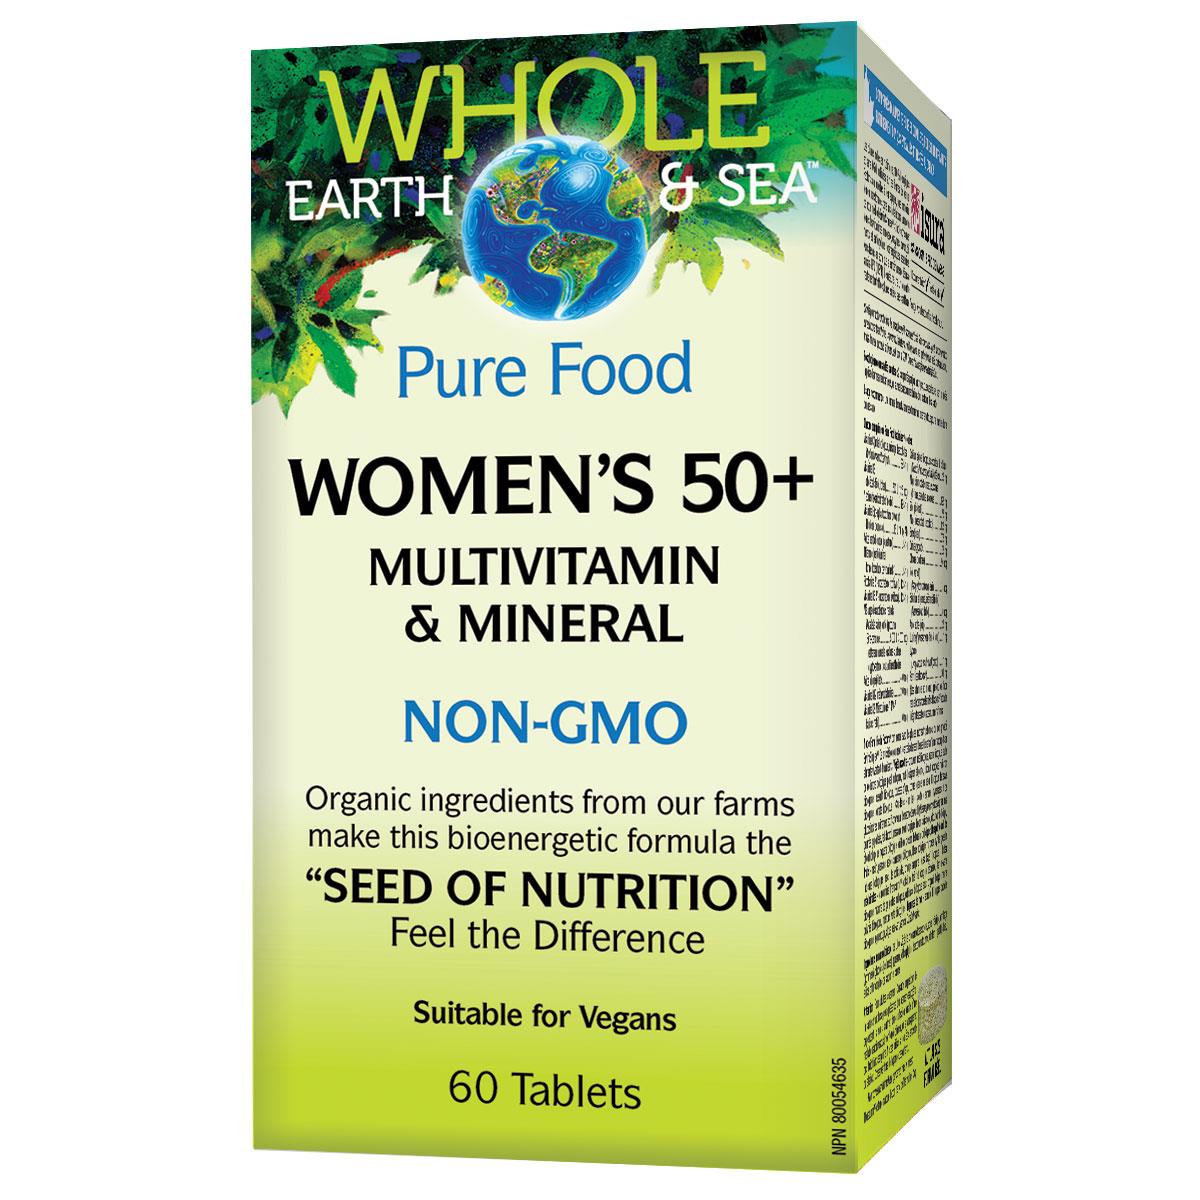 Natural Factors Whole Earth & Sea Women's 50+ Multivitamin & Mineral, 60 Tabs